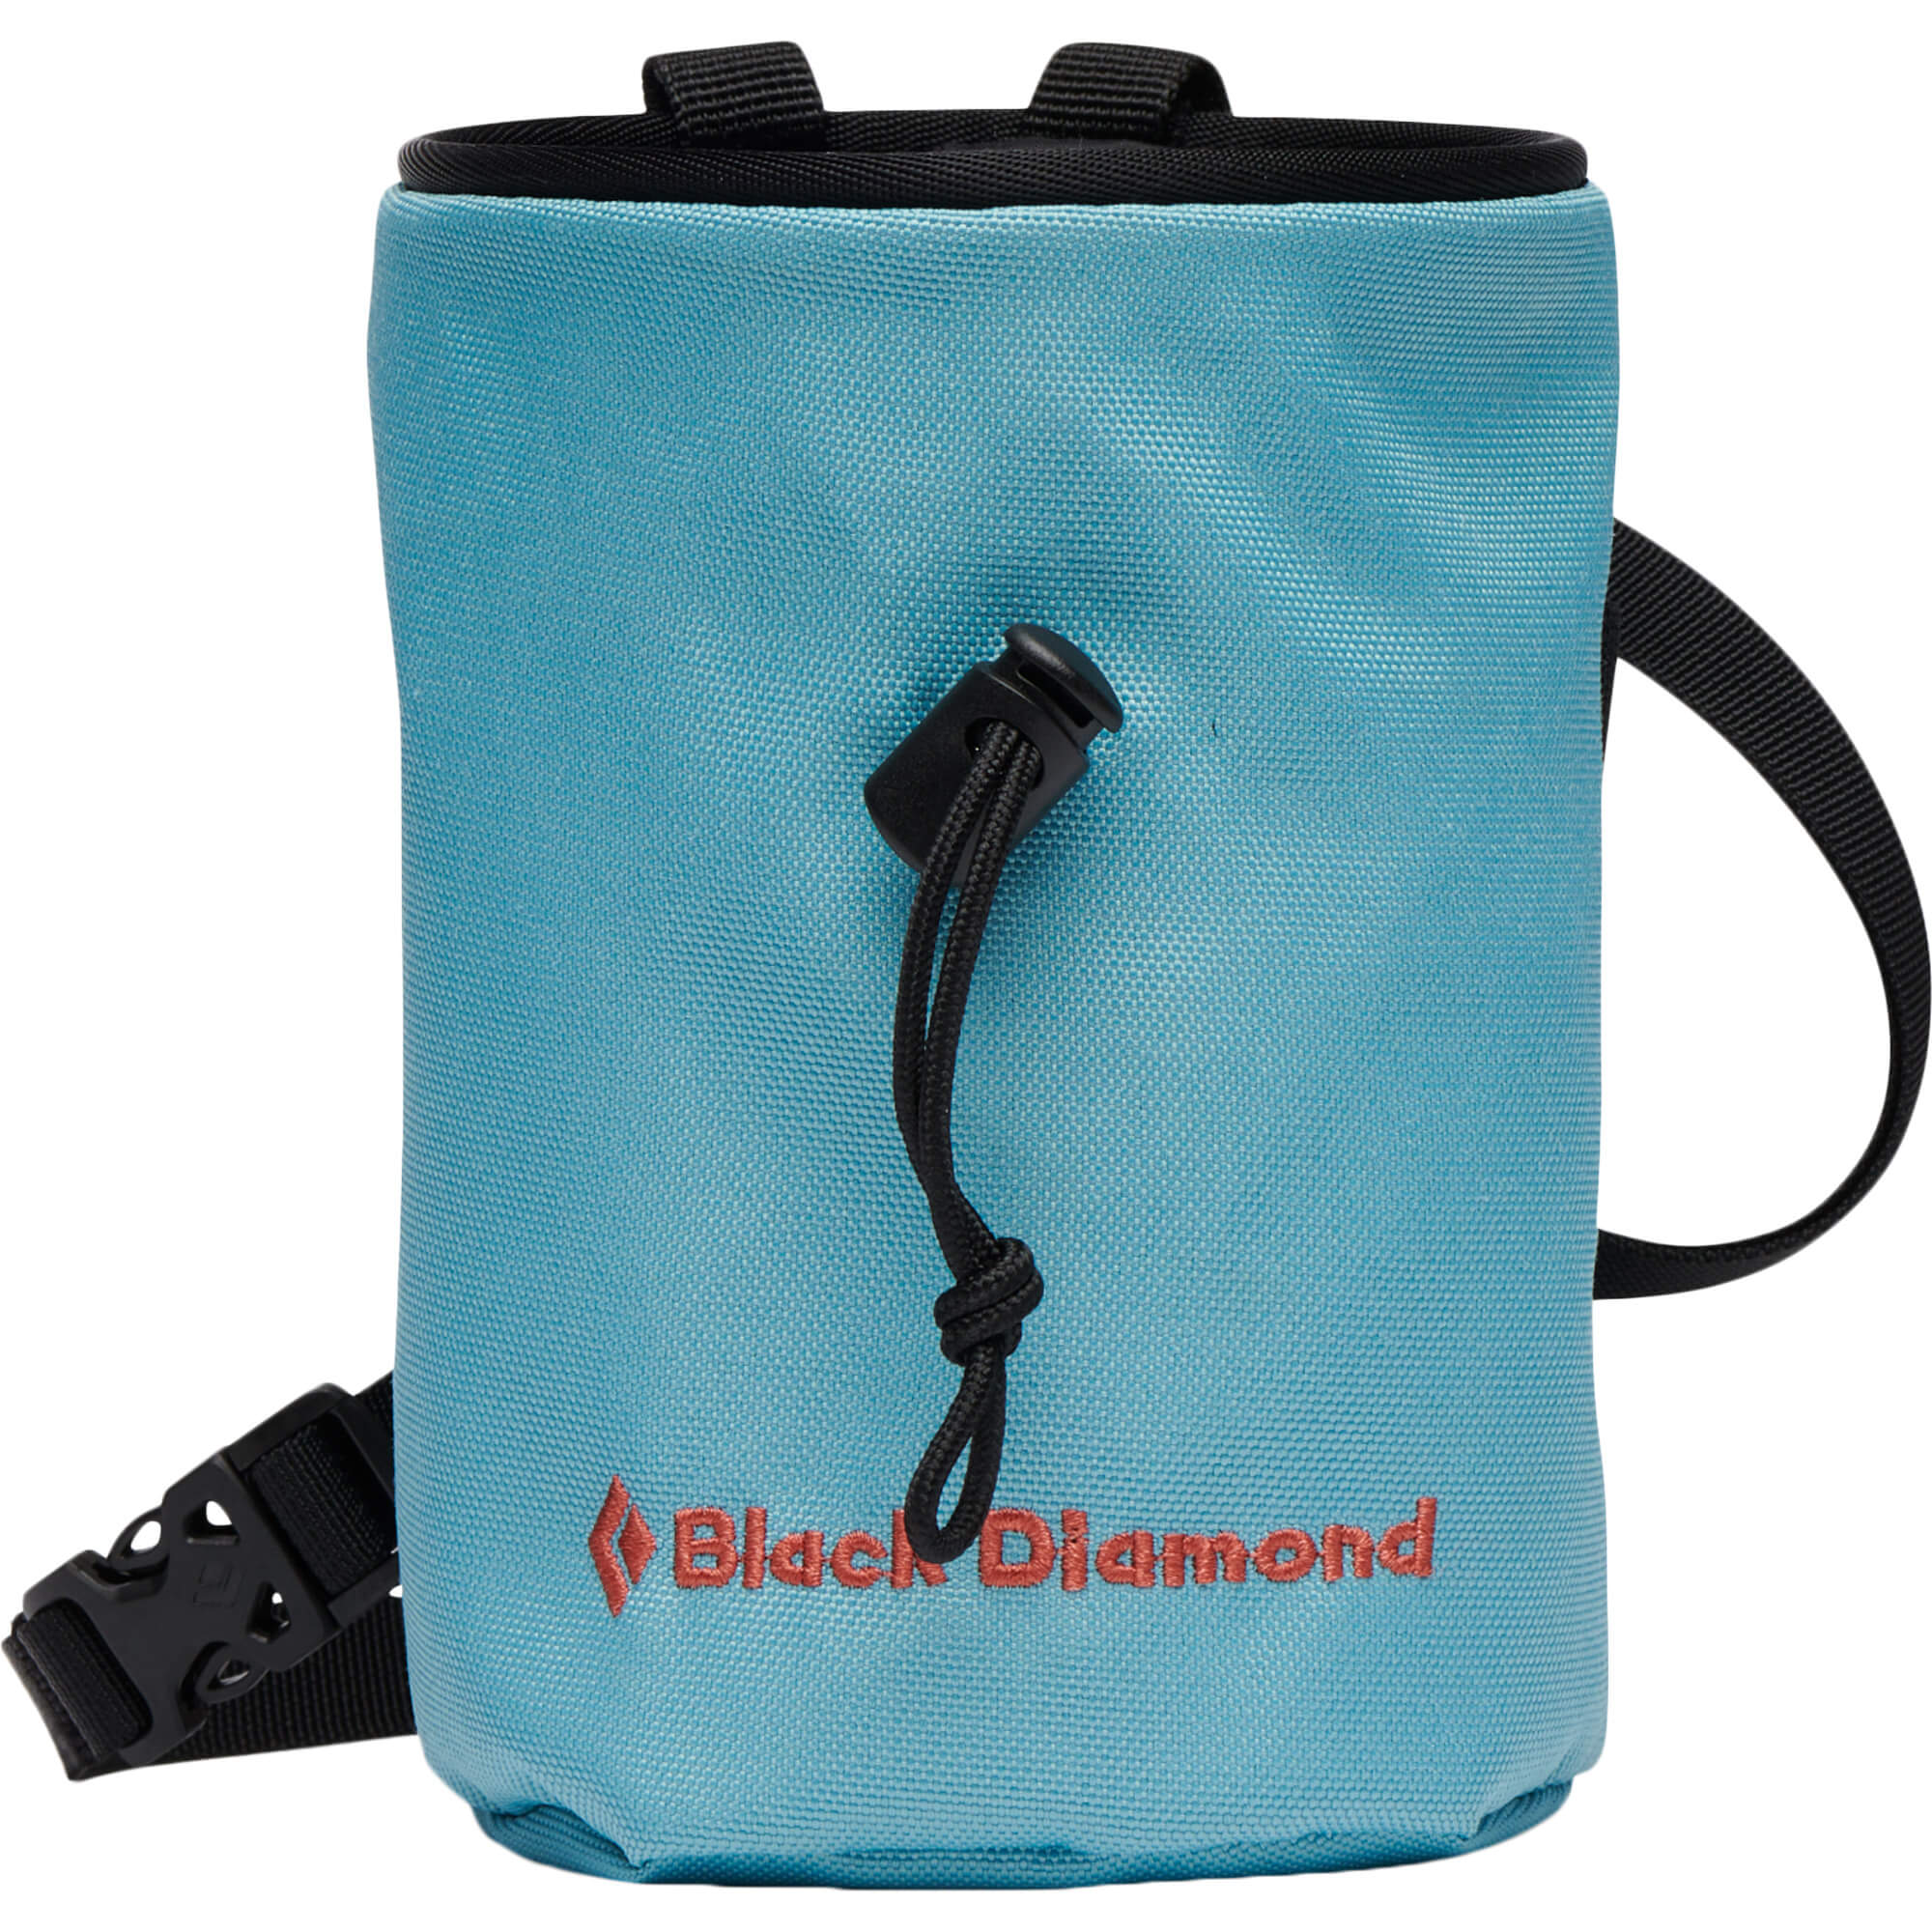 Black Diamond Momentum Womens Climbing Harness Package